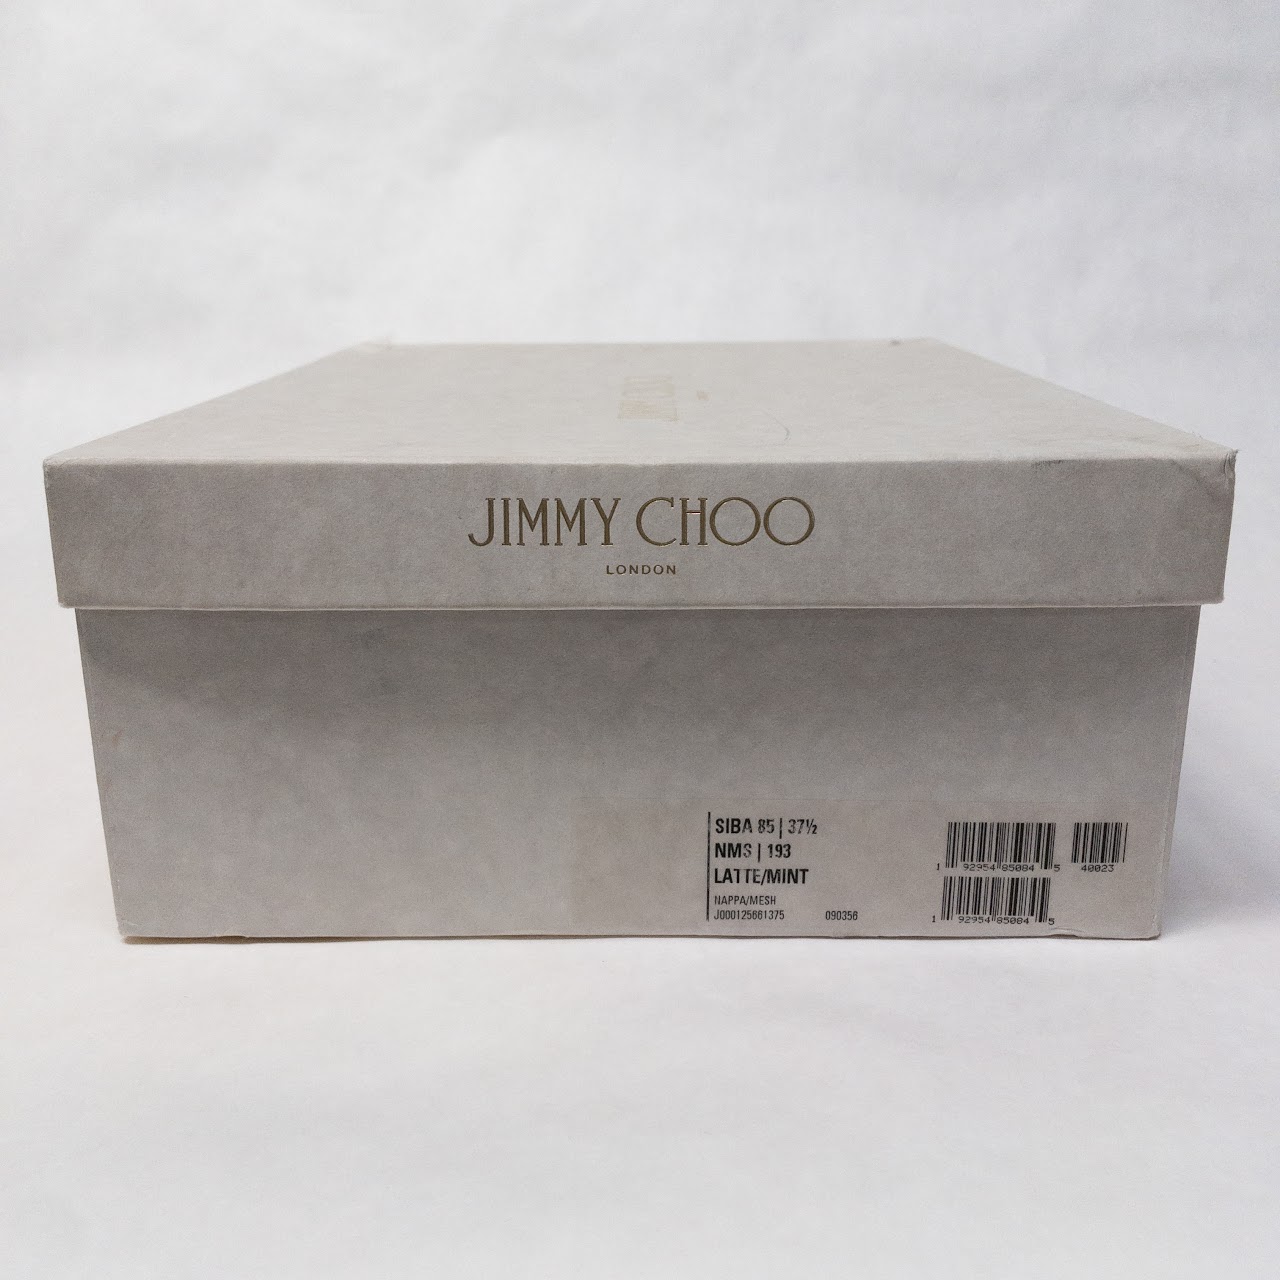 Jimmy Choo Dress Pumps